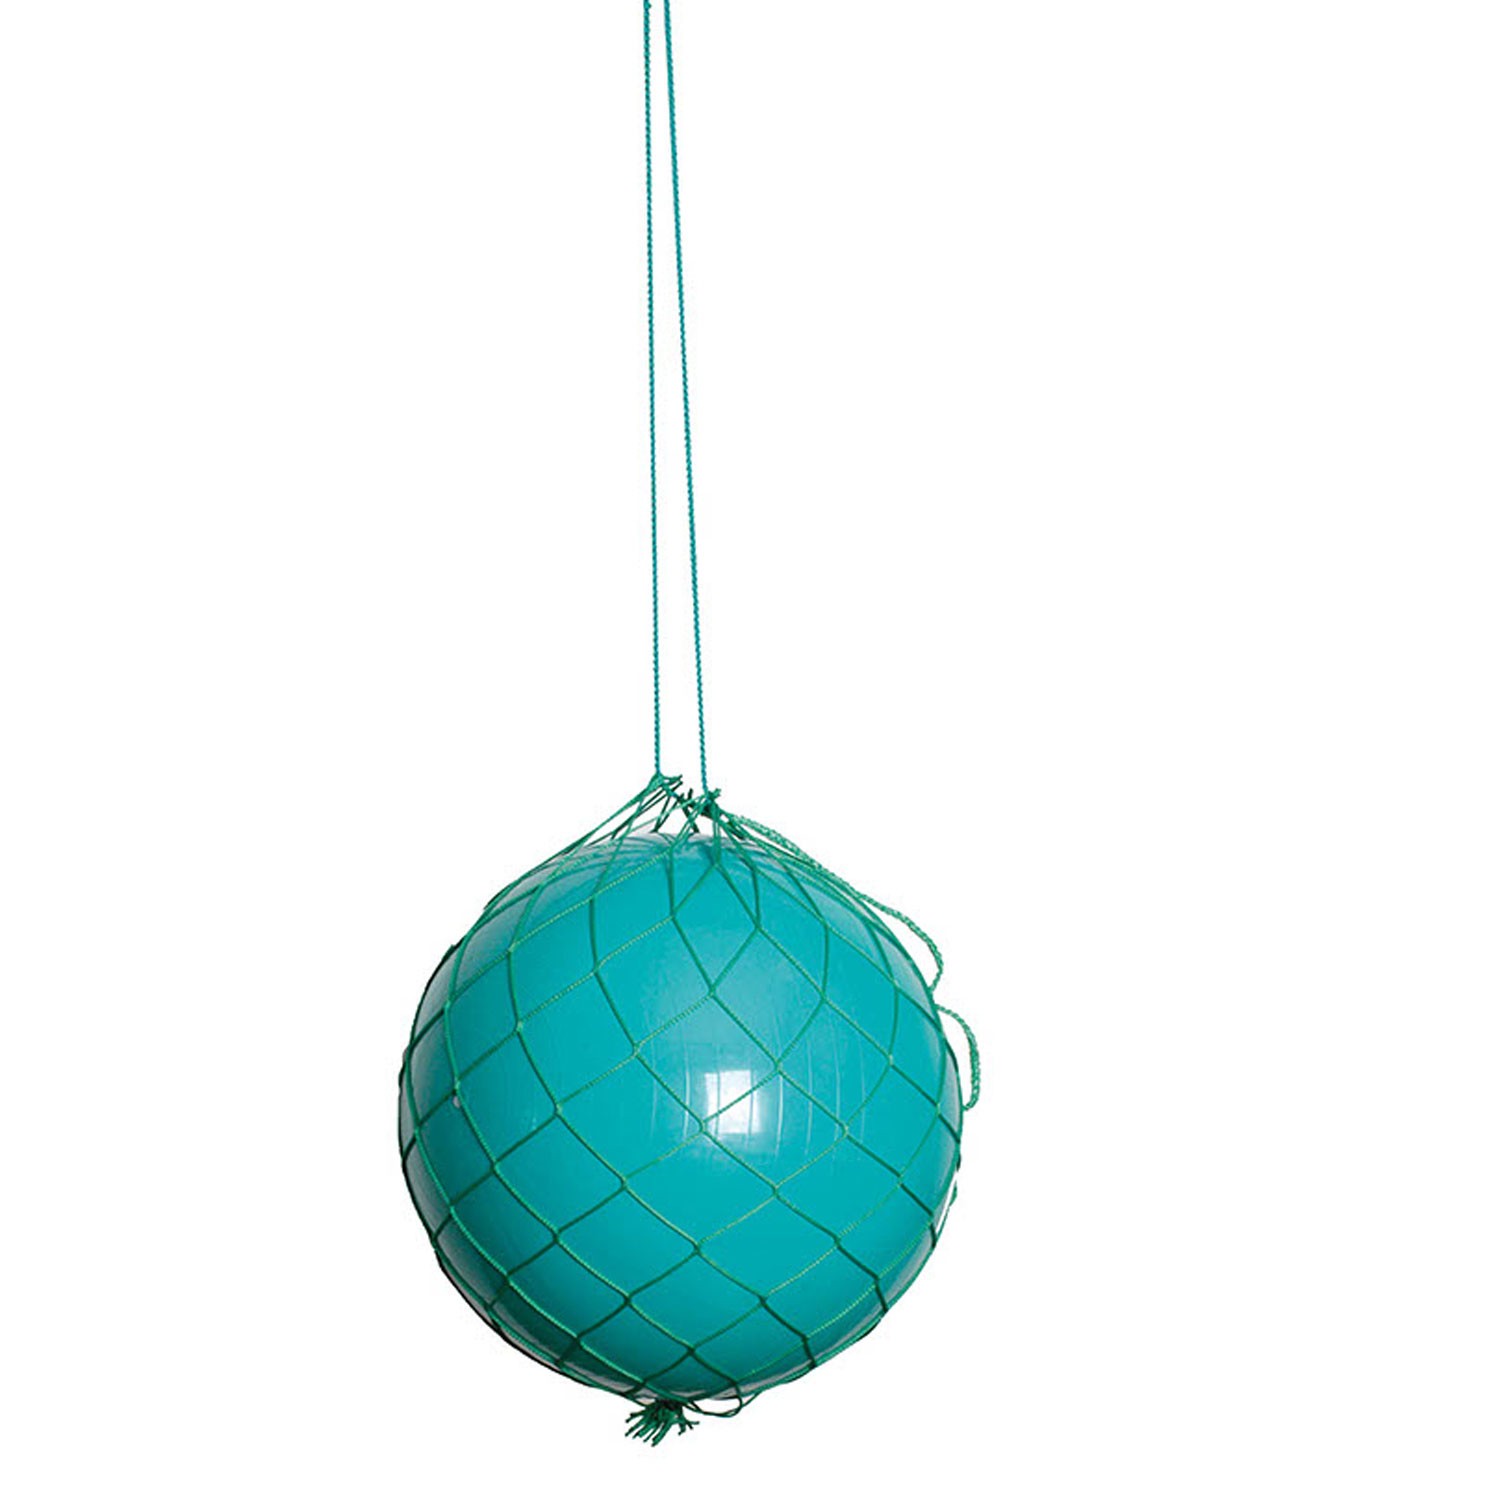 Ballnetz für 1 Pezziball mit 65 cm Ø